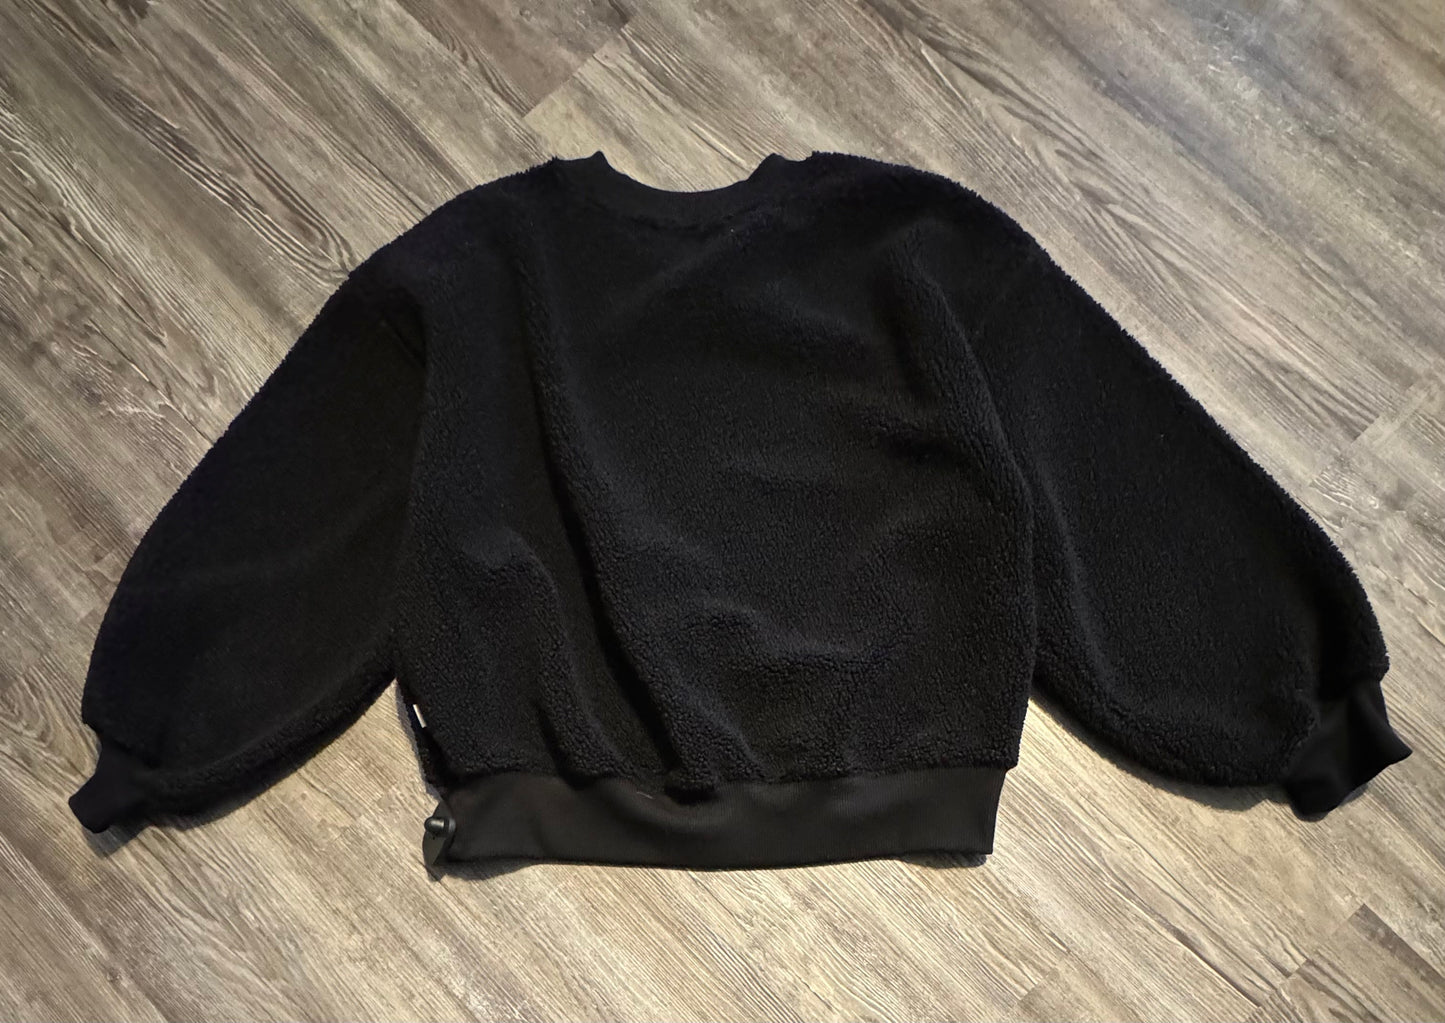 Athletic Sweatshirt Crewneck By Clothes Mentor  Size: S